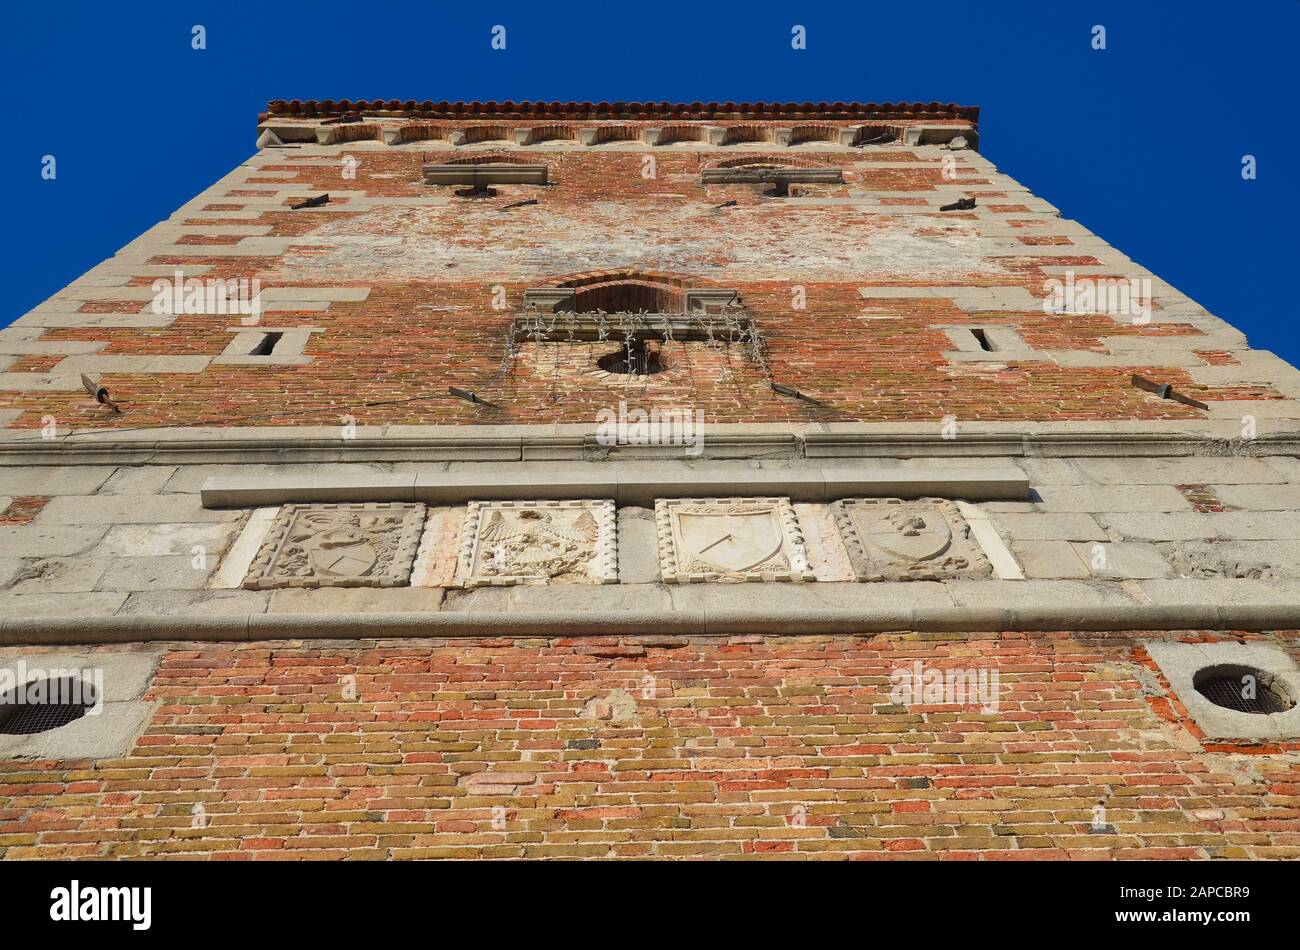 Udine in Friuli, Italy: mittelalterliches Stadttor Stock Photo